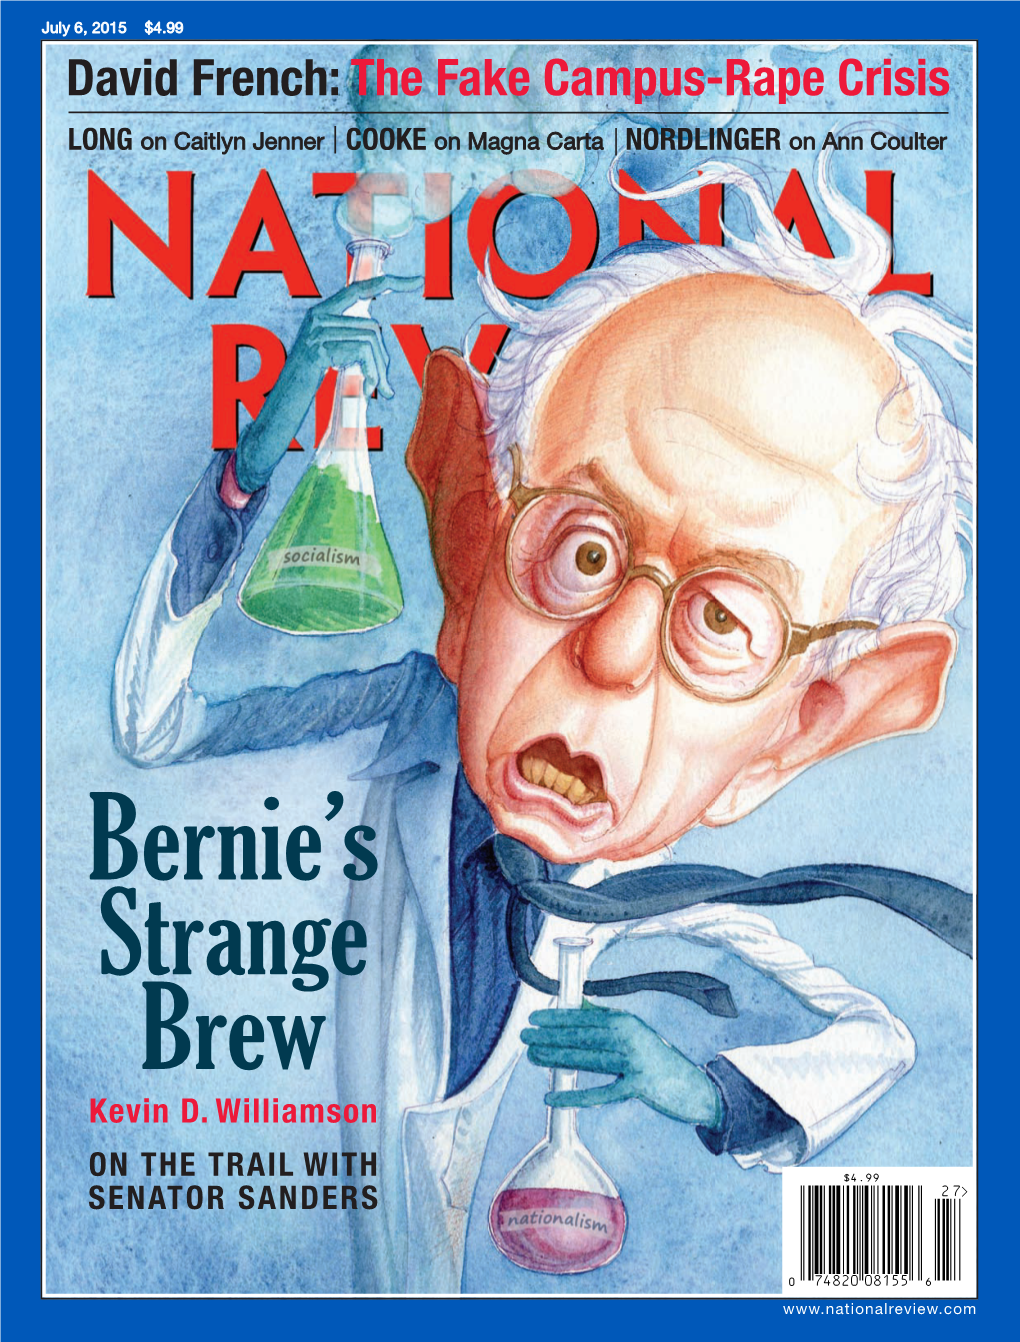 Bernie's Strange Brew